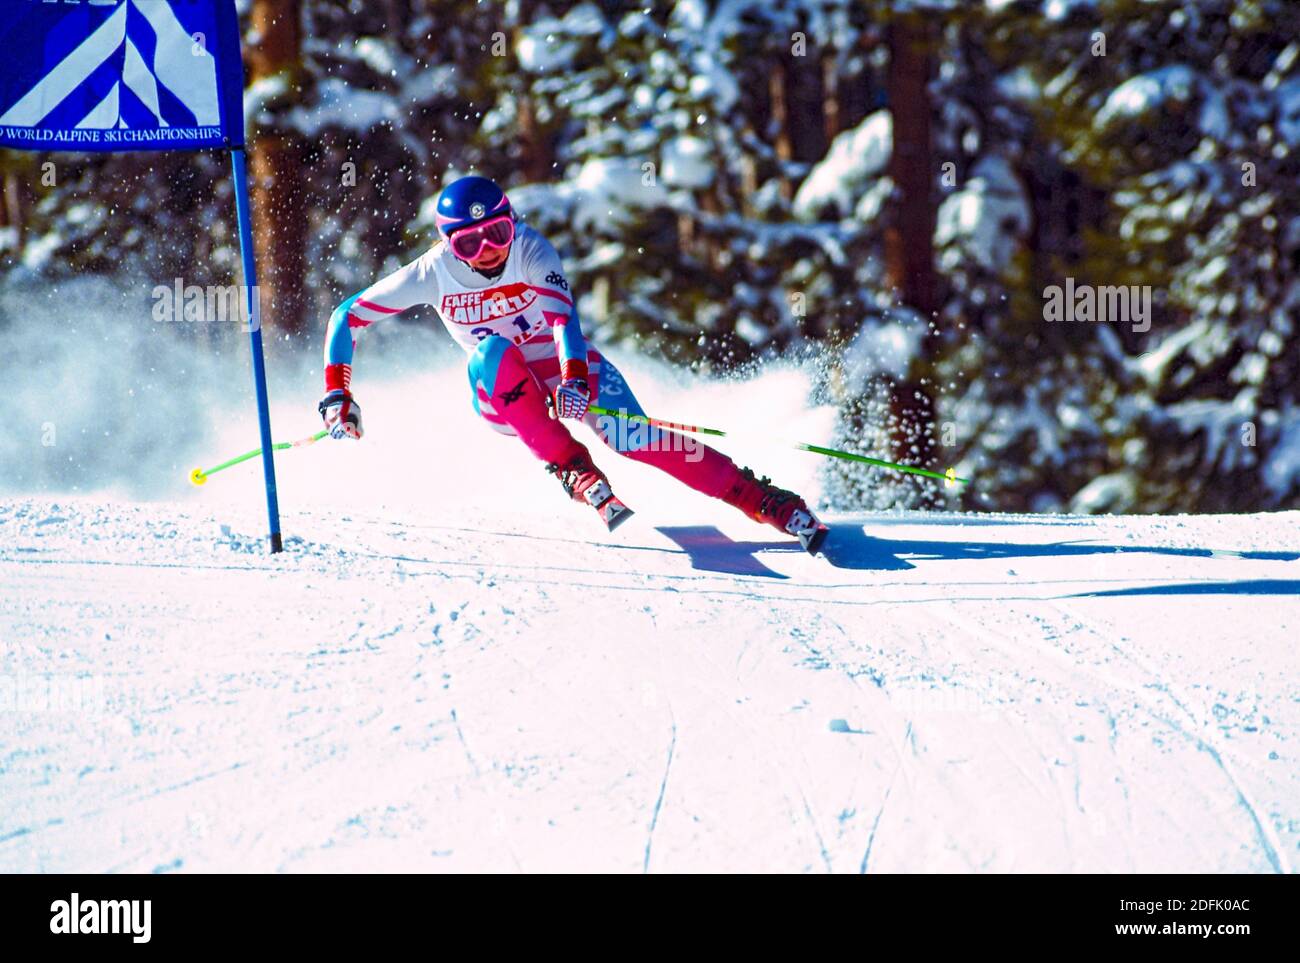 Alpine world ski championships hi-res stock photography and images - Alamy